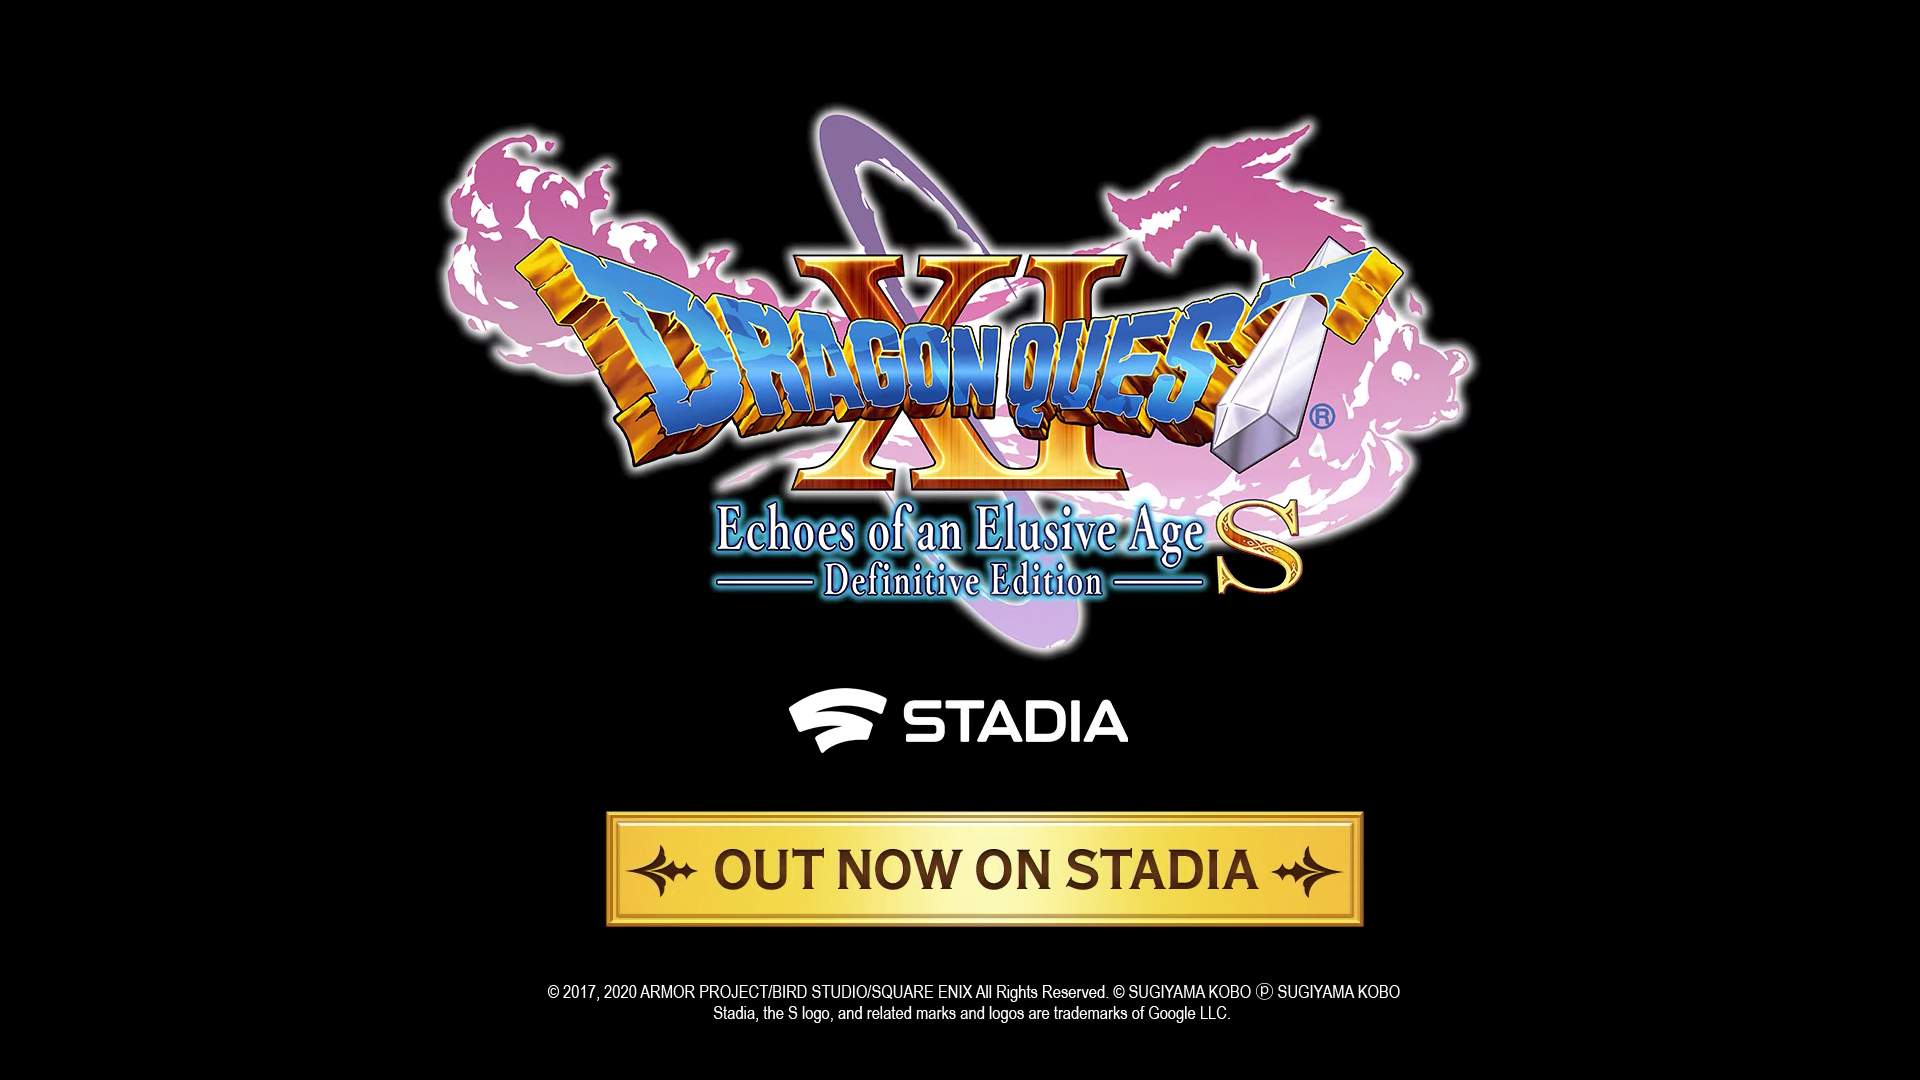 Square Enix The Official Square Enix Website Dragon Quest Xi S Echoes Of An Elusive Age